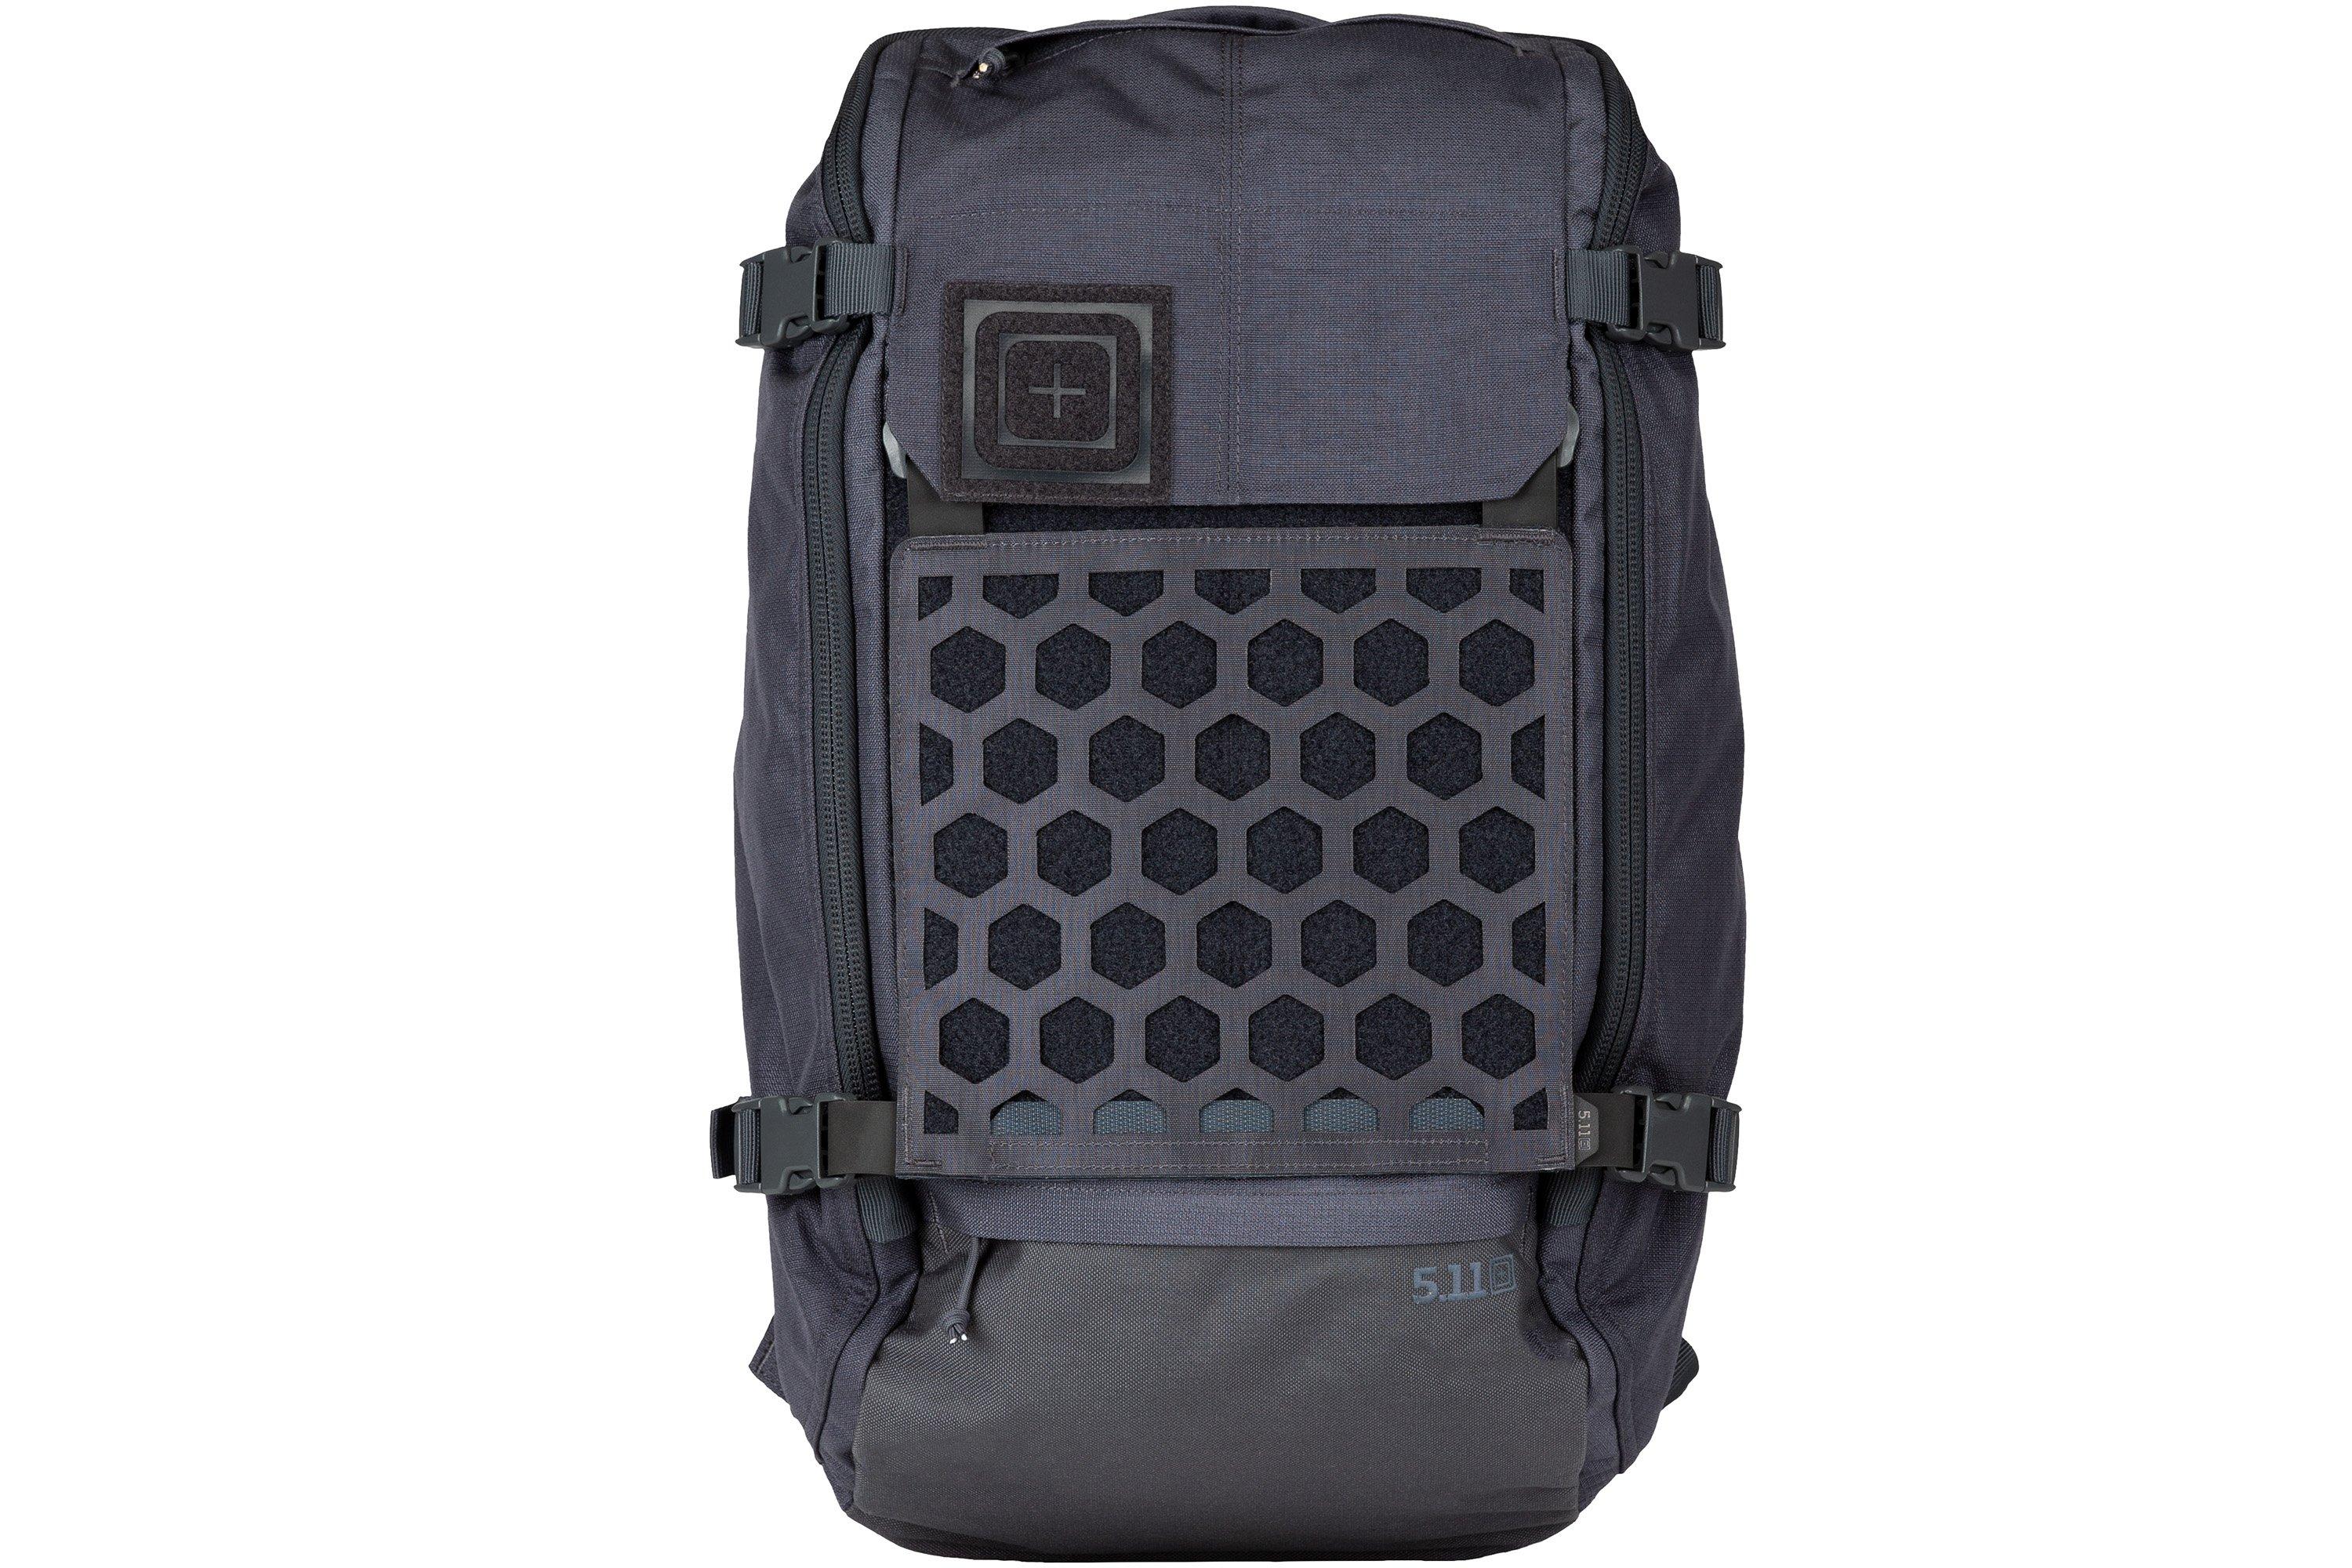 5.11 AMP24 backpack grey, 32 litres | Advantageously shopping at ...